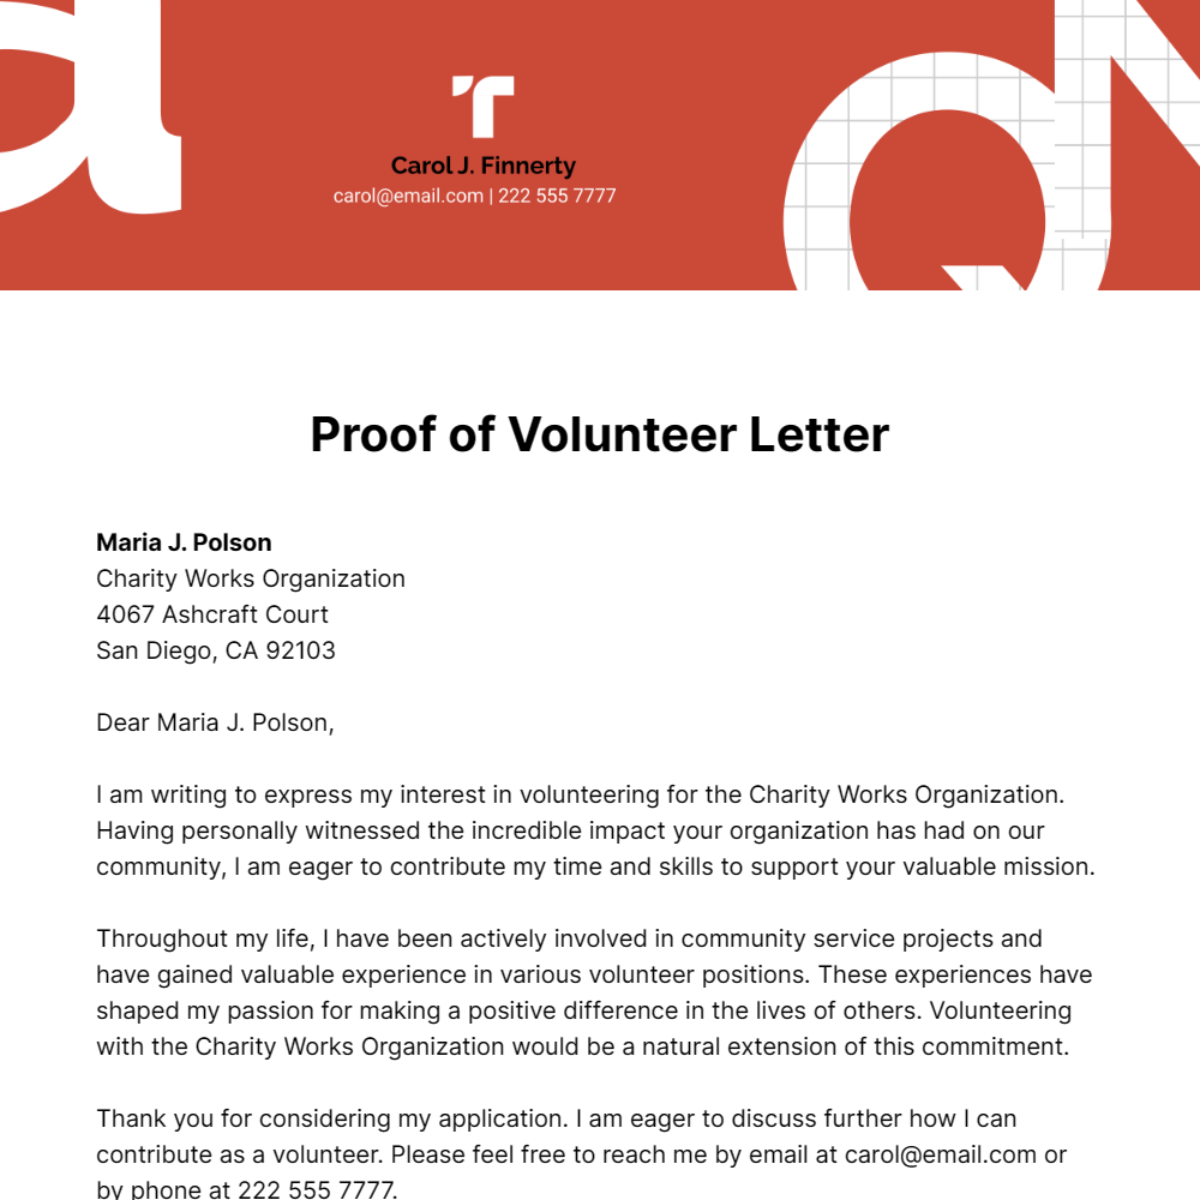 Proof of Volunteer Letter Template